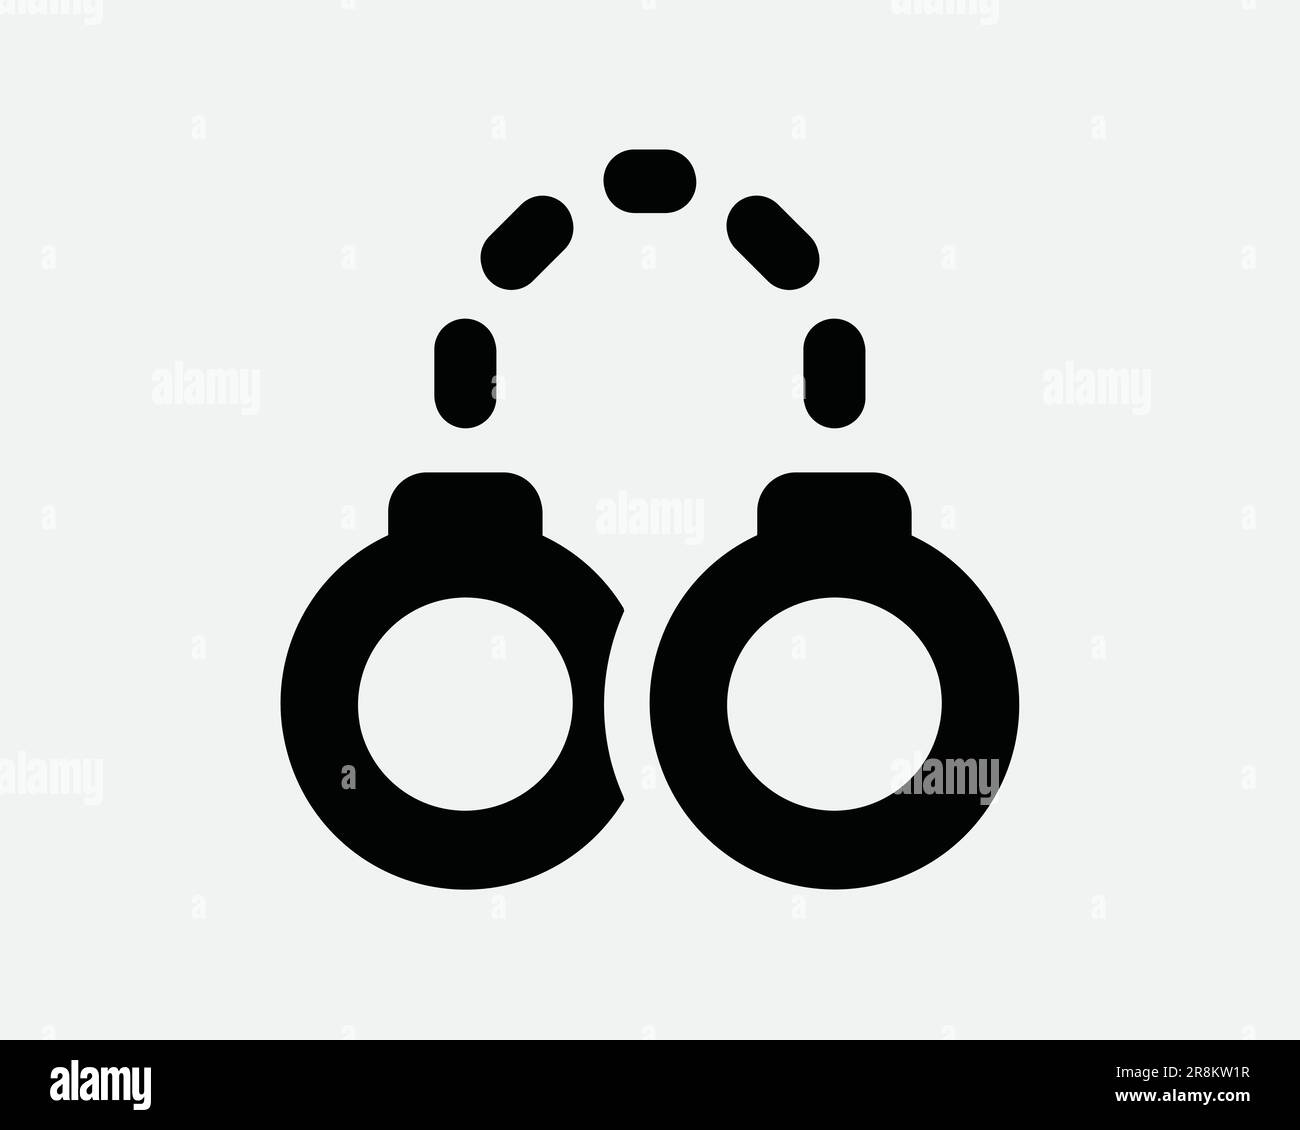 Handcuff Chain Icon. Handcuffs Lock Tie Crime Law Enforcement Security Bondage Slave. Black White Sign Symbol Illustration Artwork Clipart EPS Vector Stock Vector